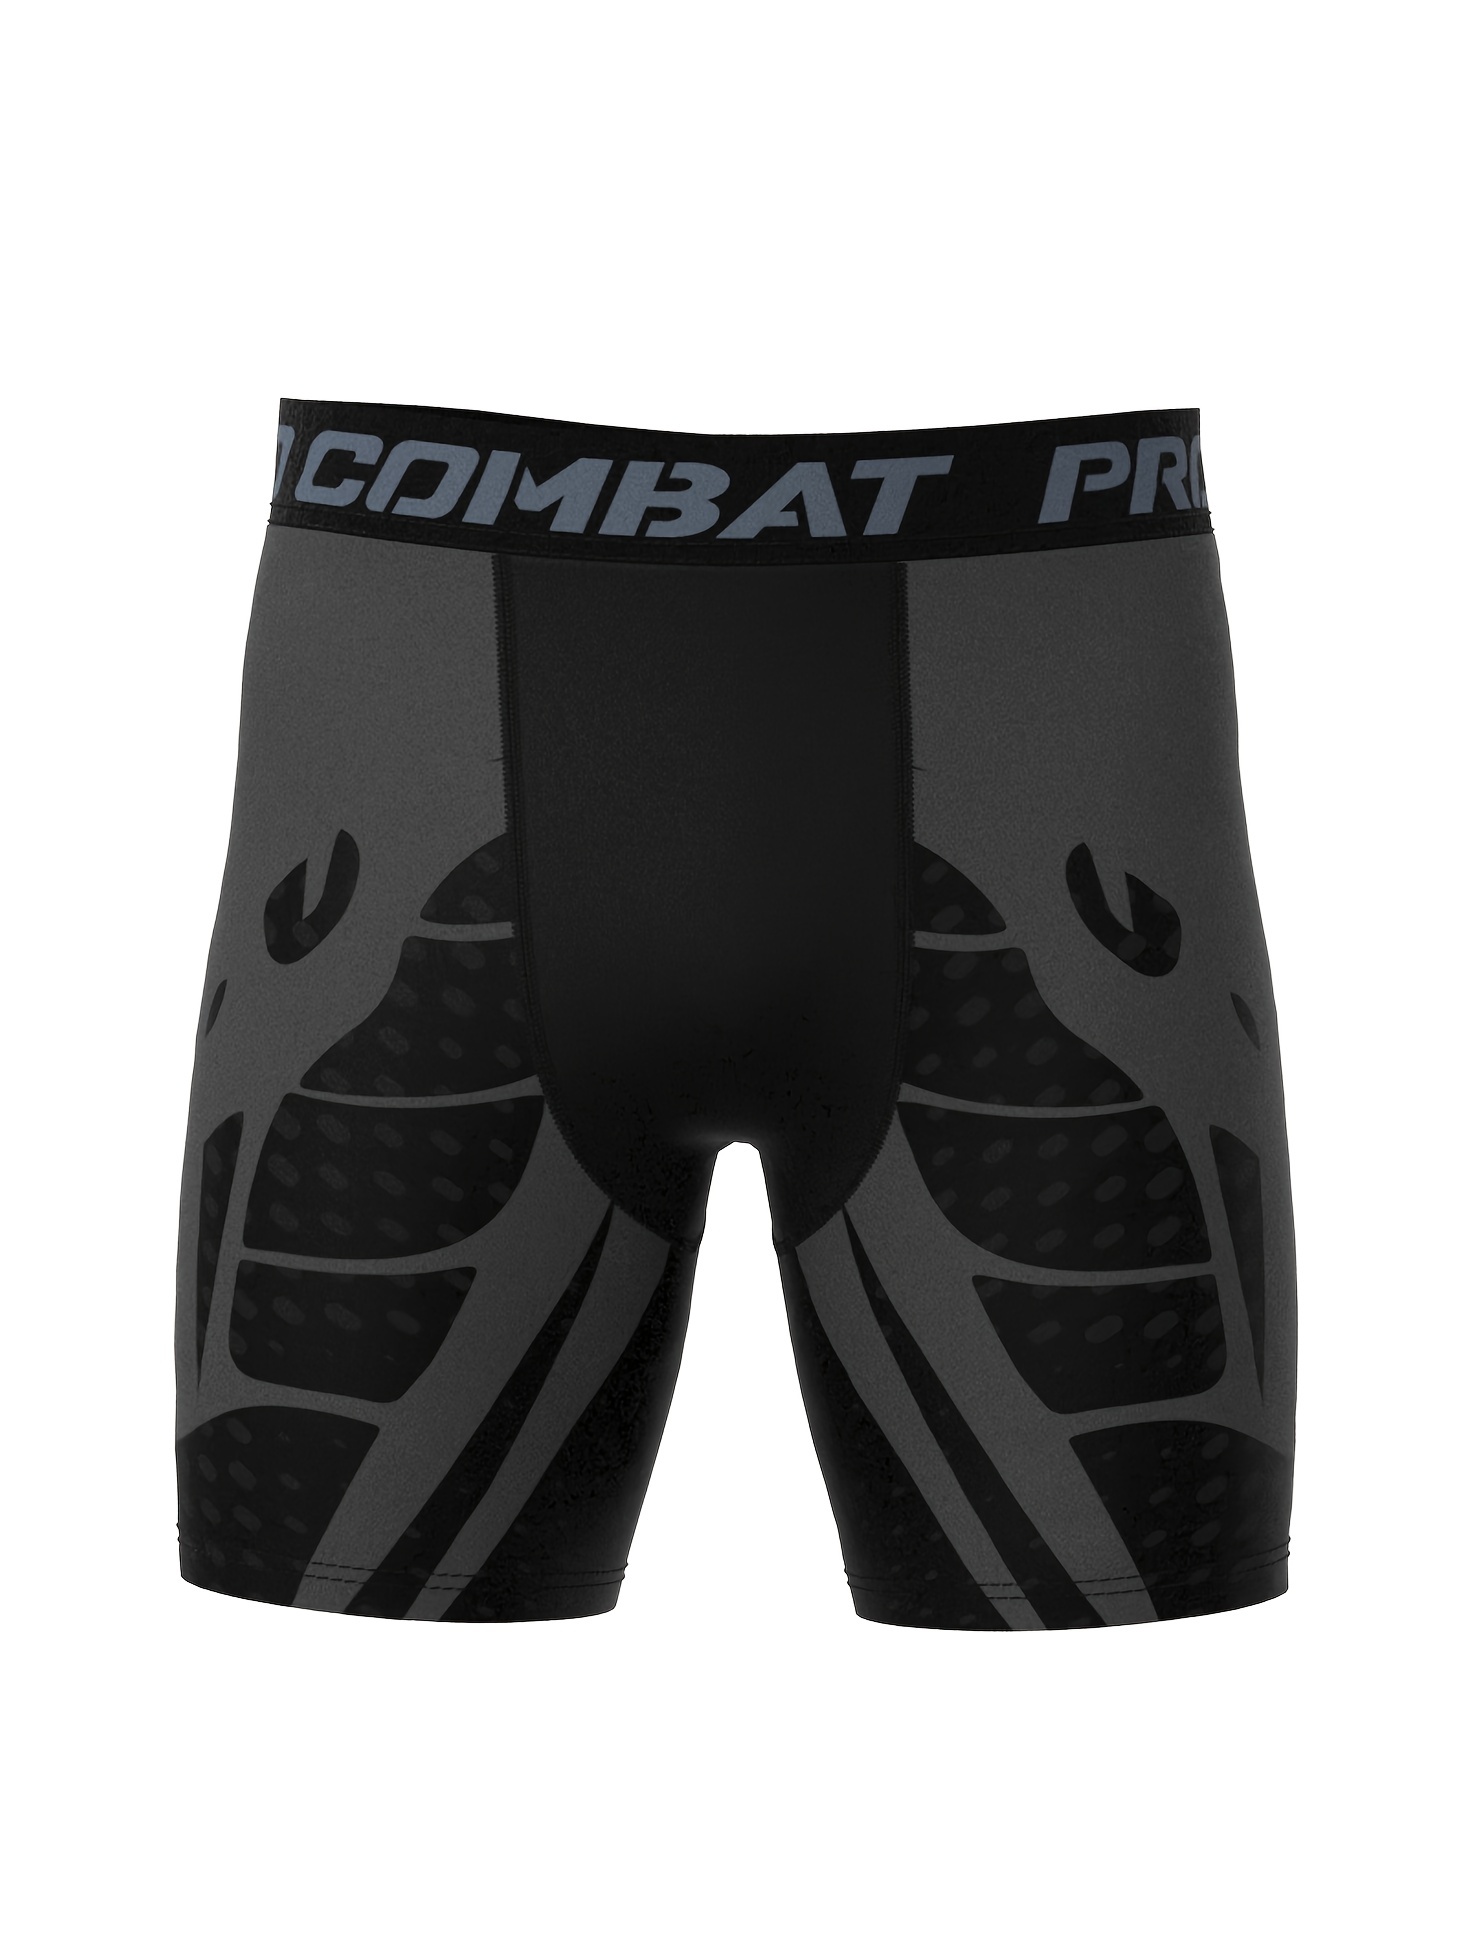 Nike Mens Pro Combat Compression Basketball Shorts Black 